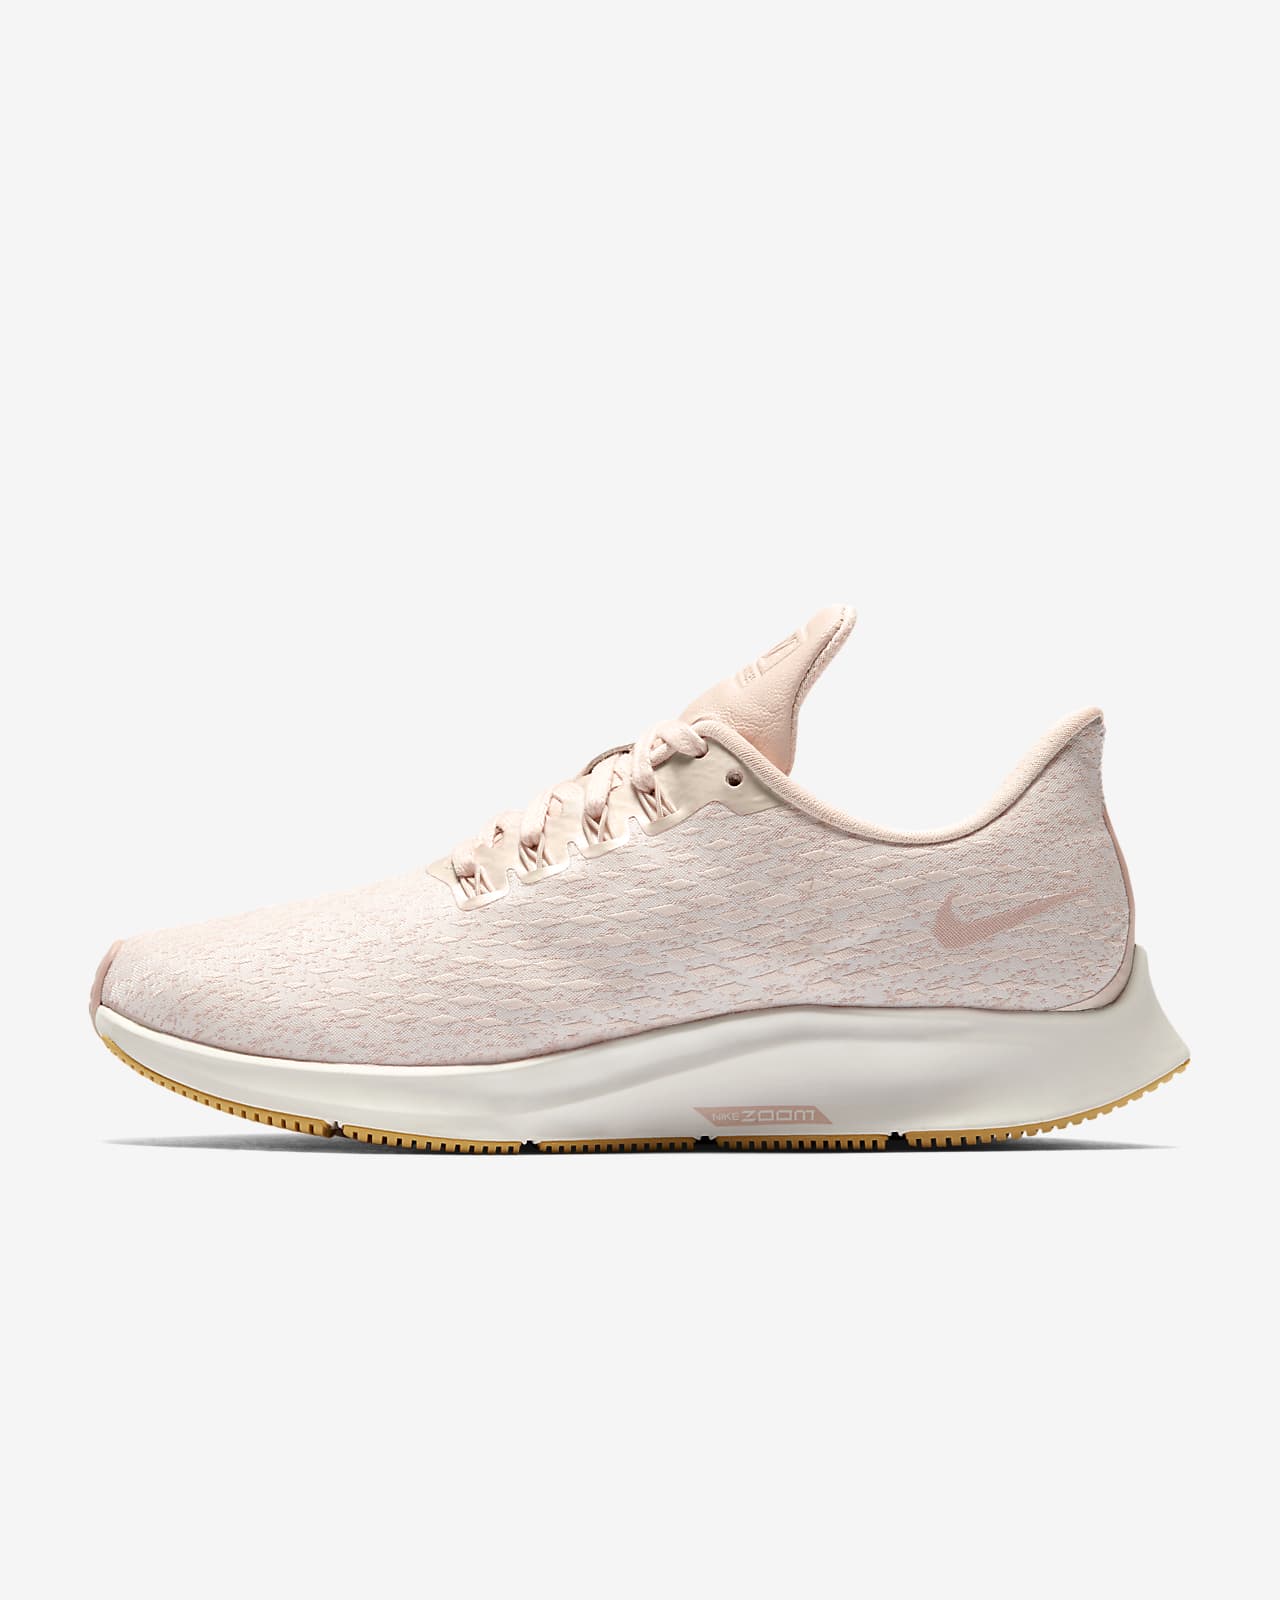 Nike Air Zoom Pegasus 35 Premium Women's Running Shoe